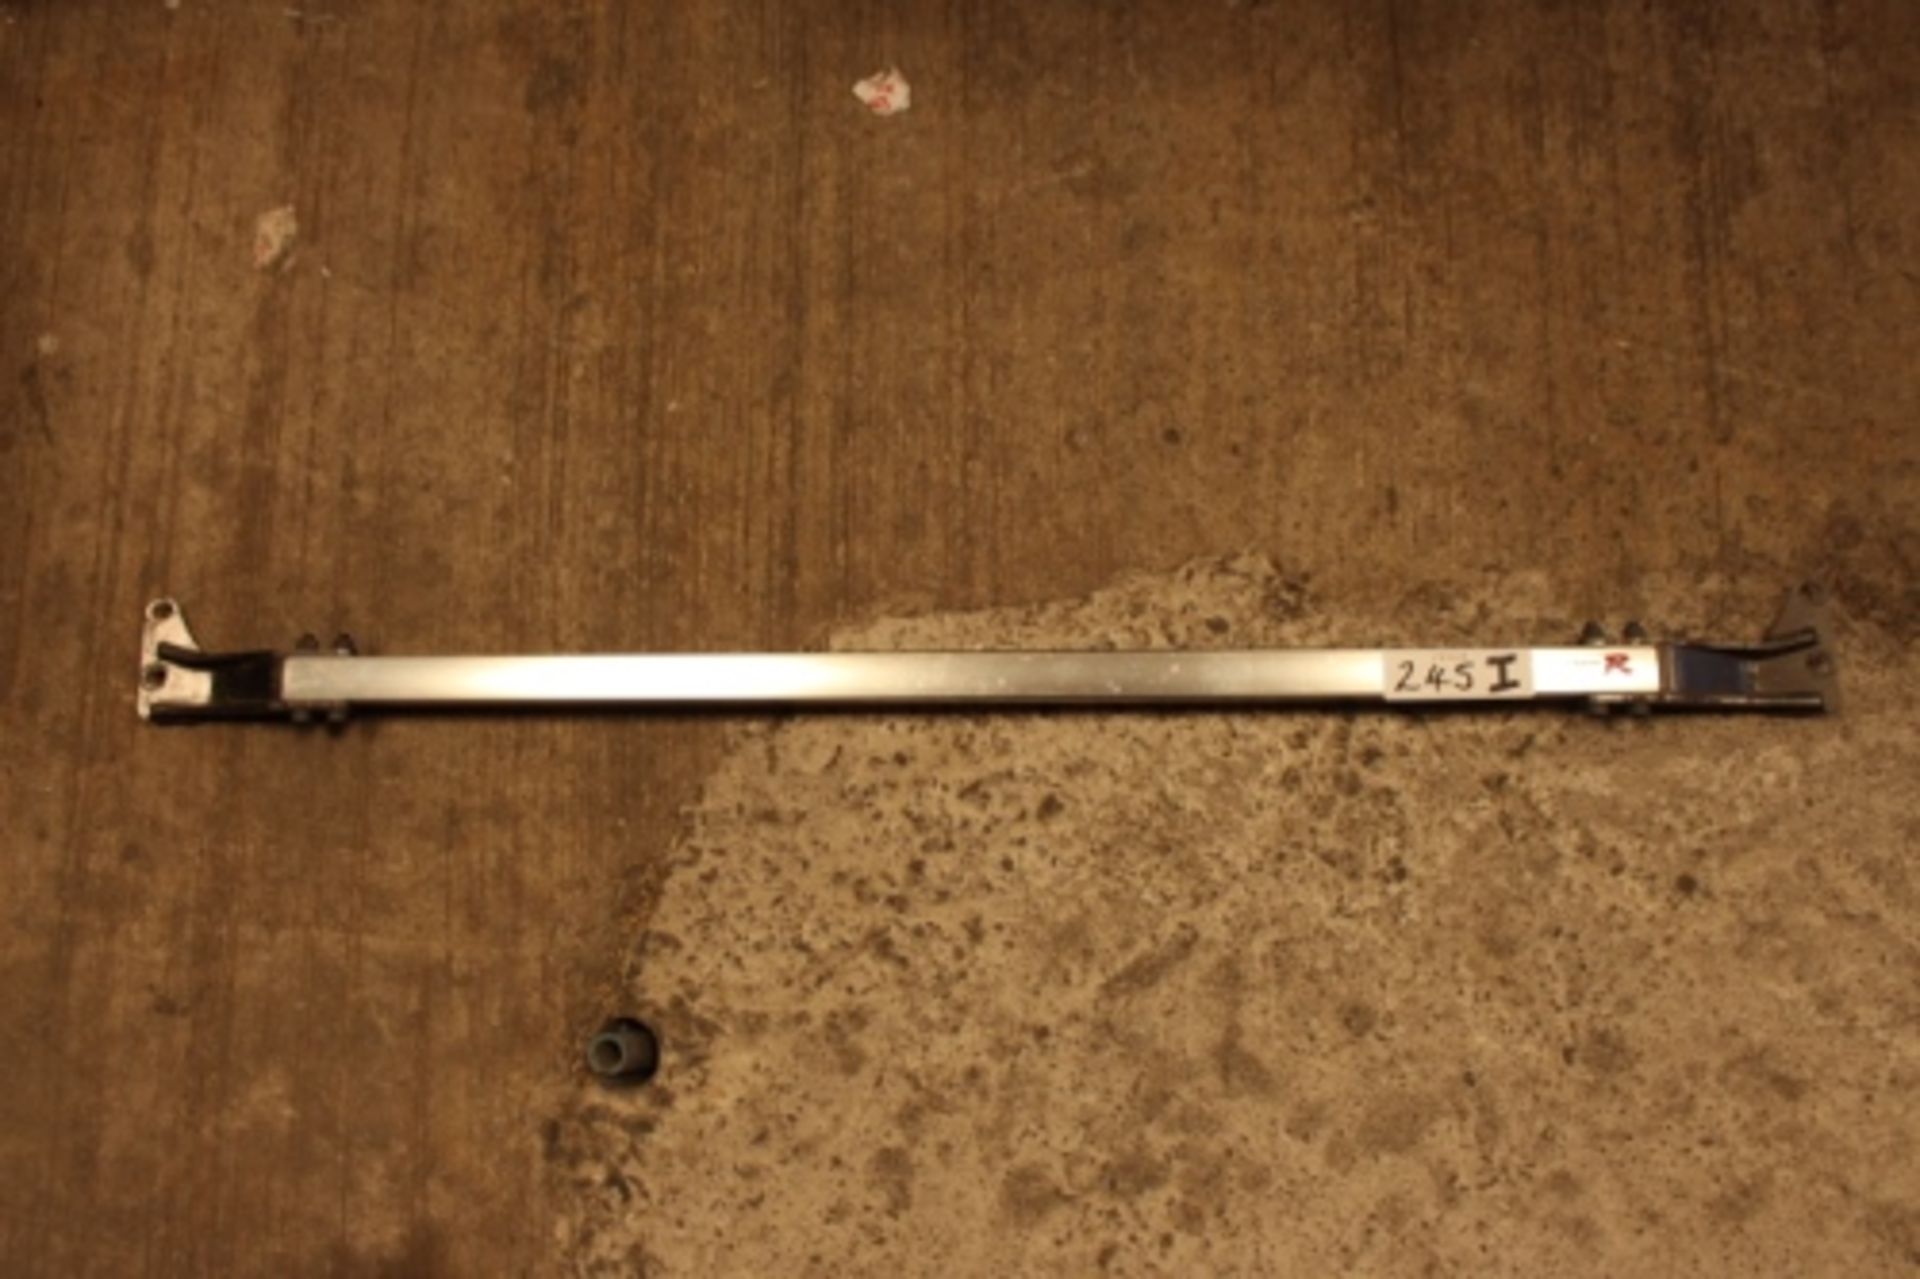 Integra type R strut brace - Used (B34) - Image 2 of 2